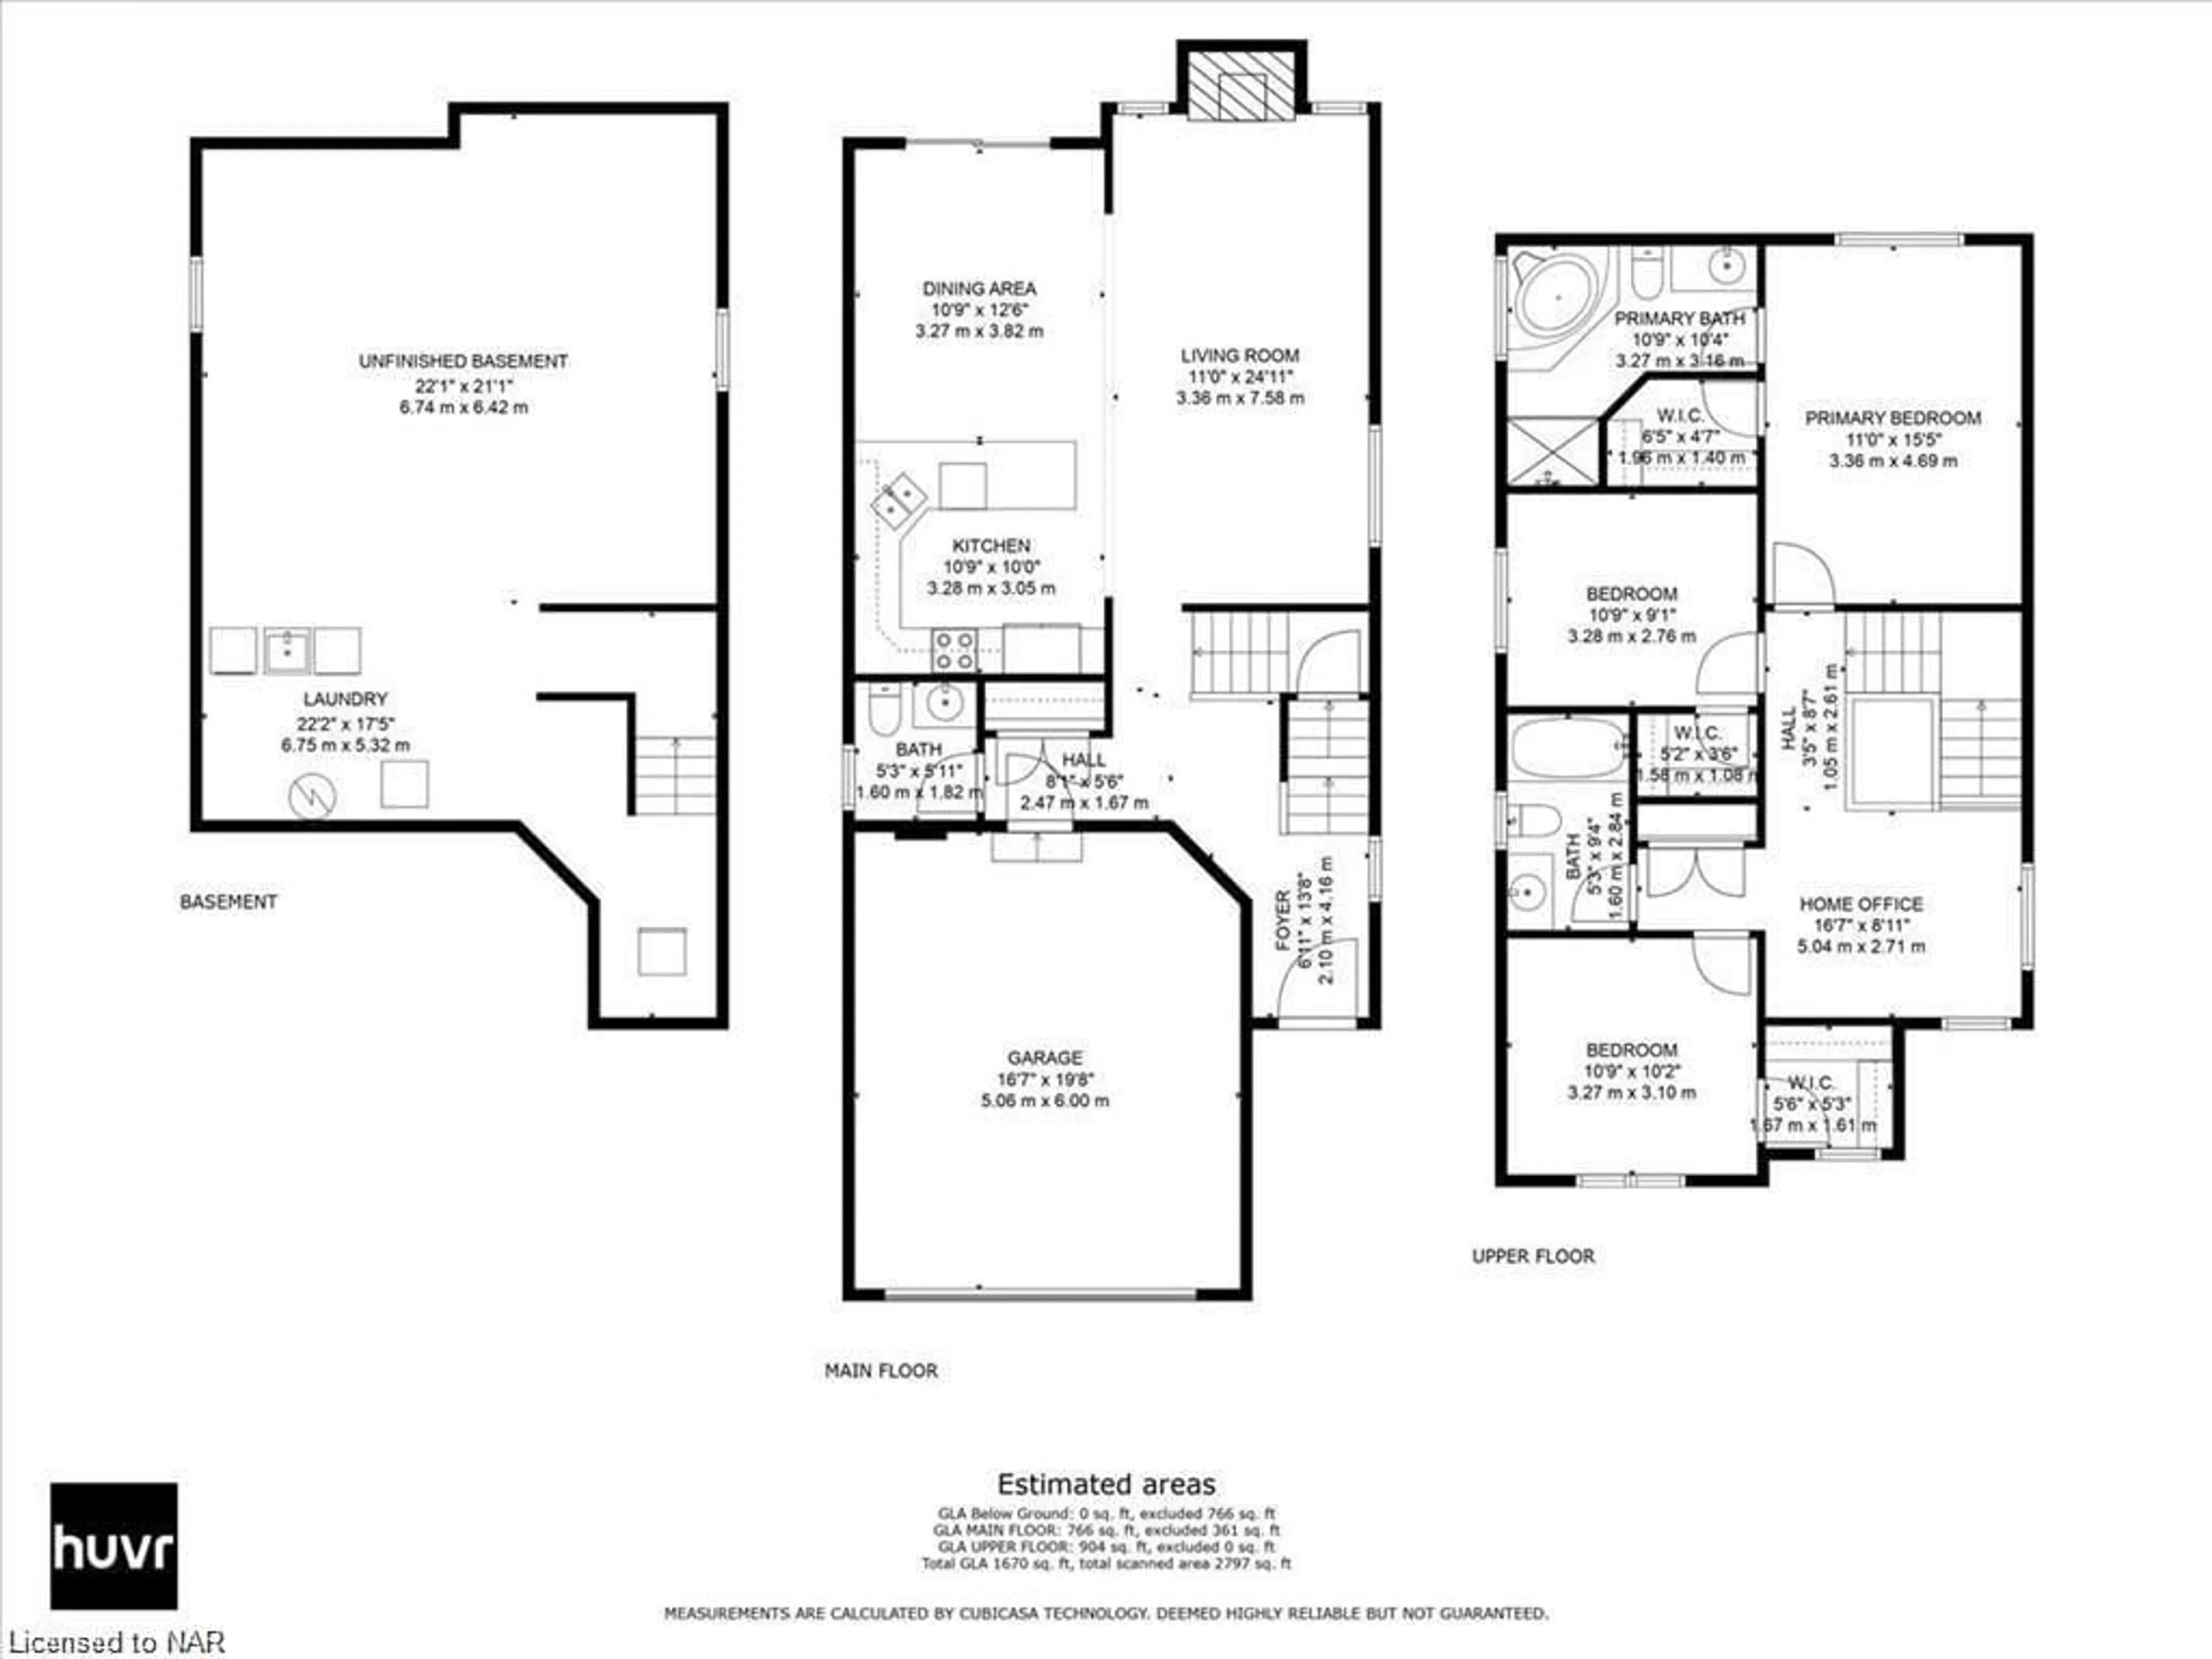 Floor plan for 6616 Mary Dr, Niagara Falls Ontario L2H 0B5